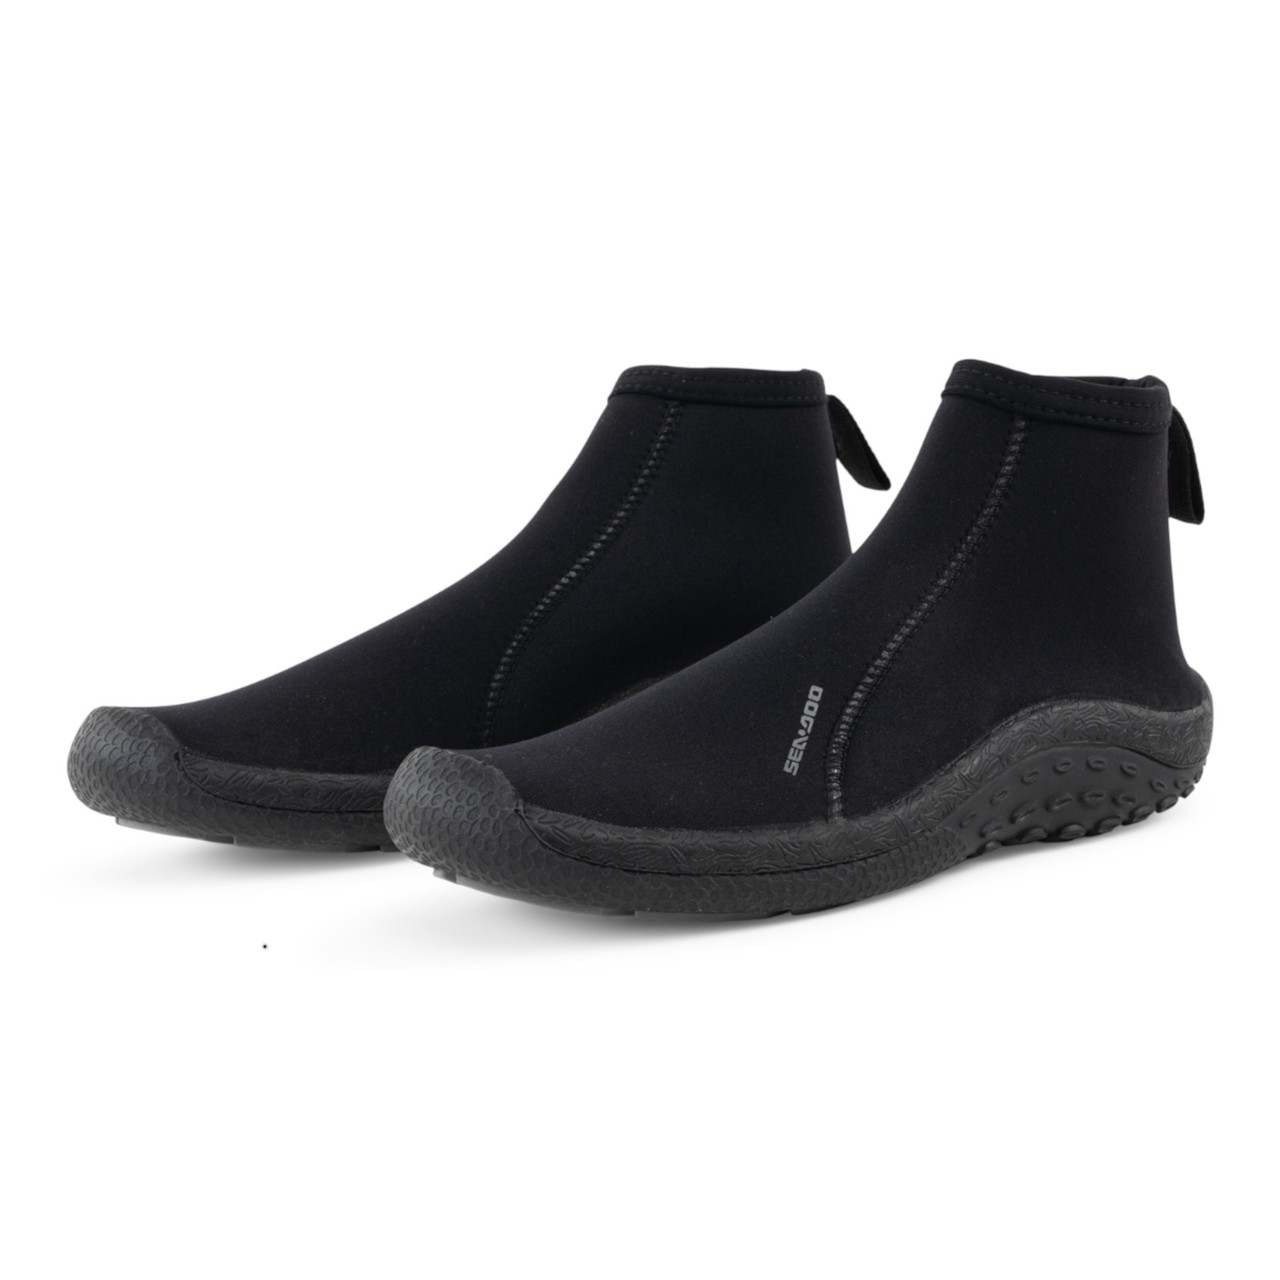 Sea-Doo New OEM, Unisex Ultra-Durable Double-glued Neoprene Shoes, 4442613190